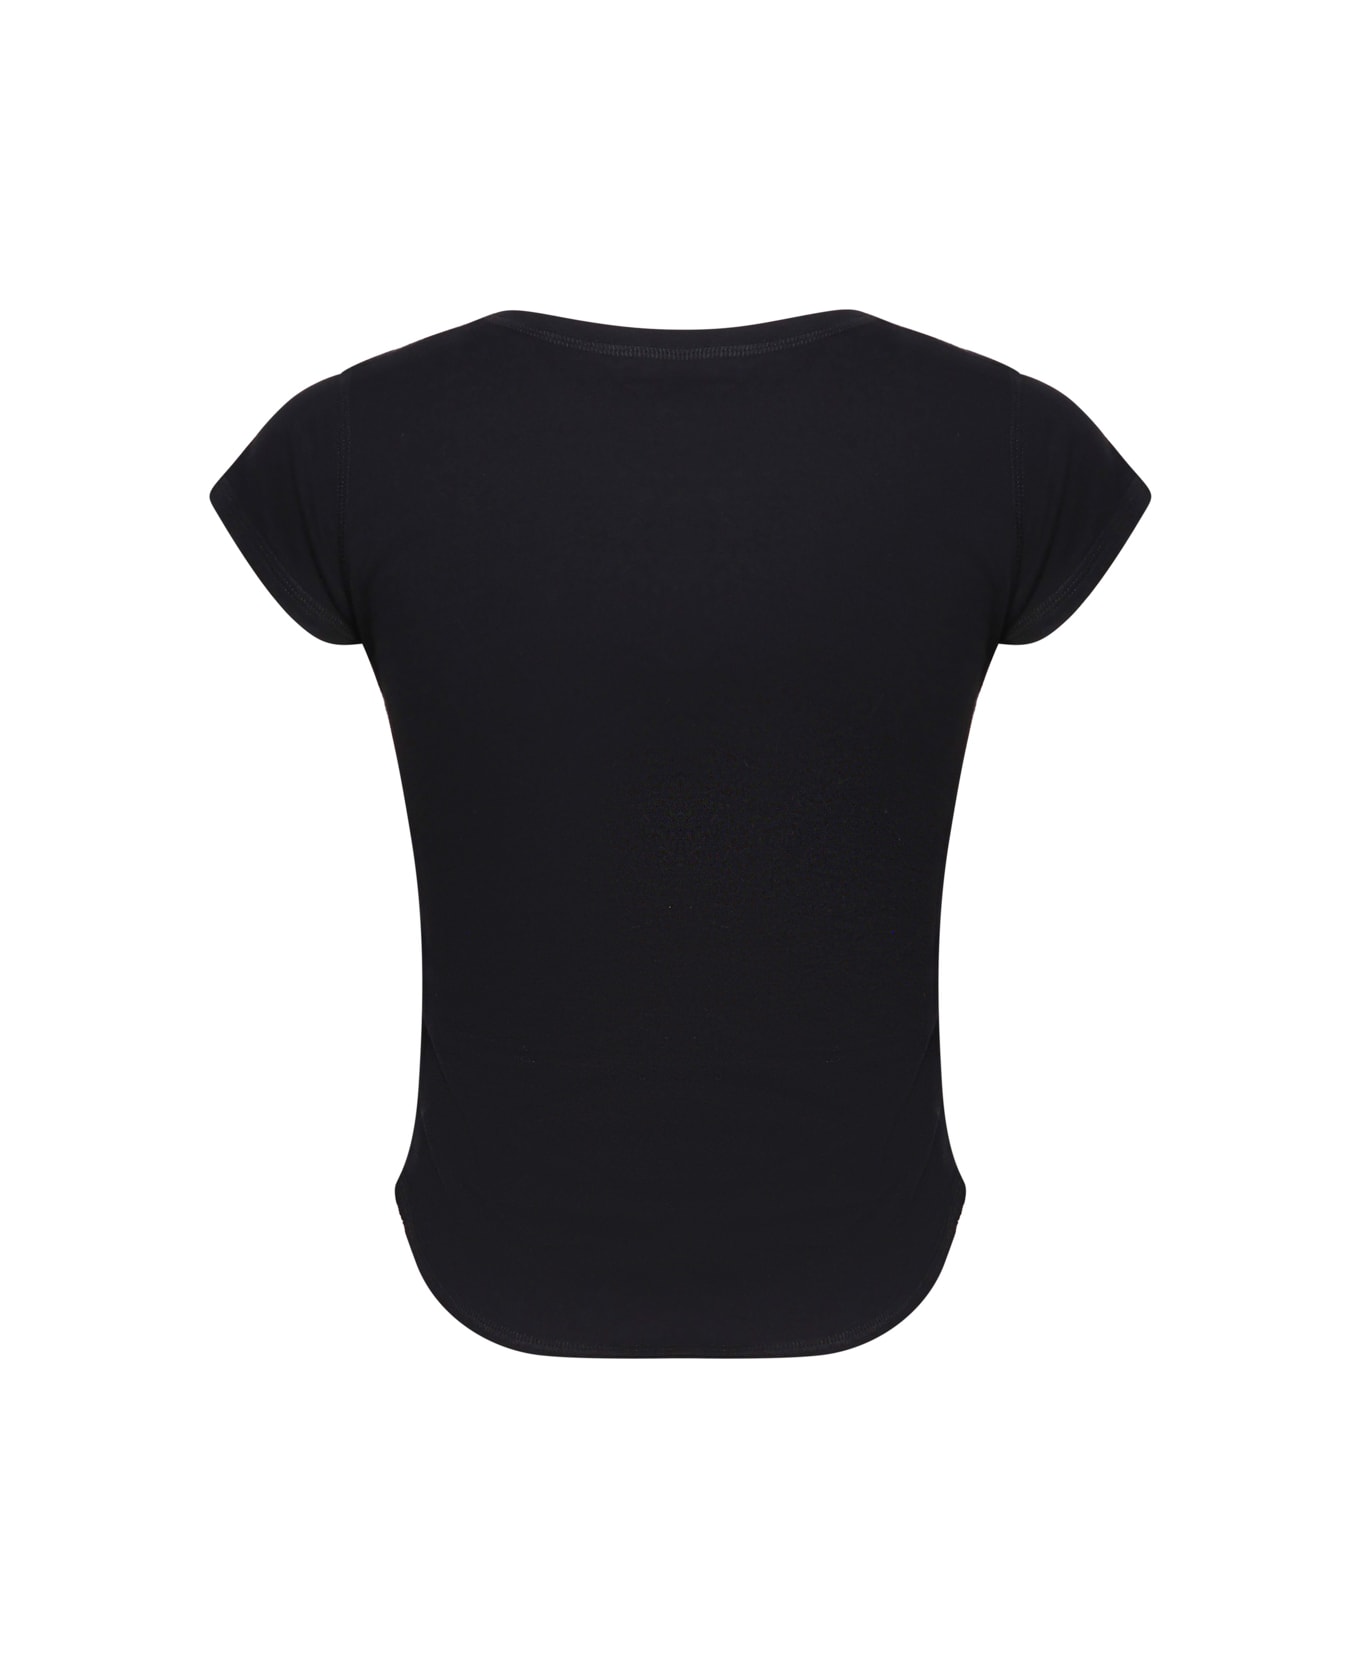 Stella McCartney T-shirt With Print - Black Tシャツ